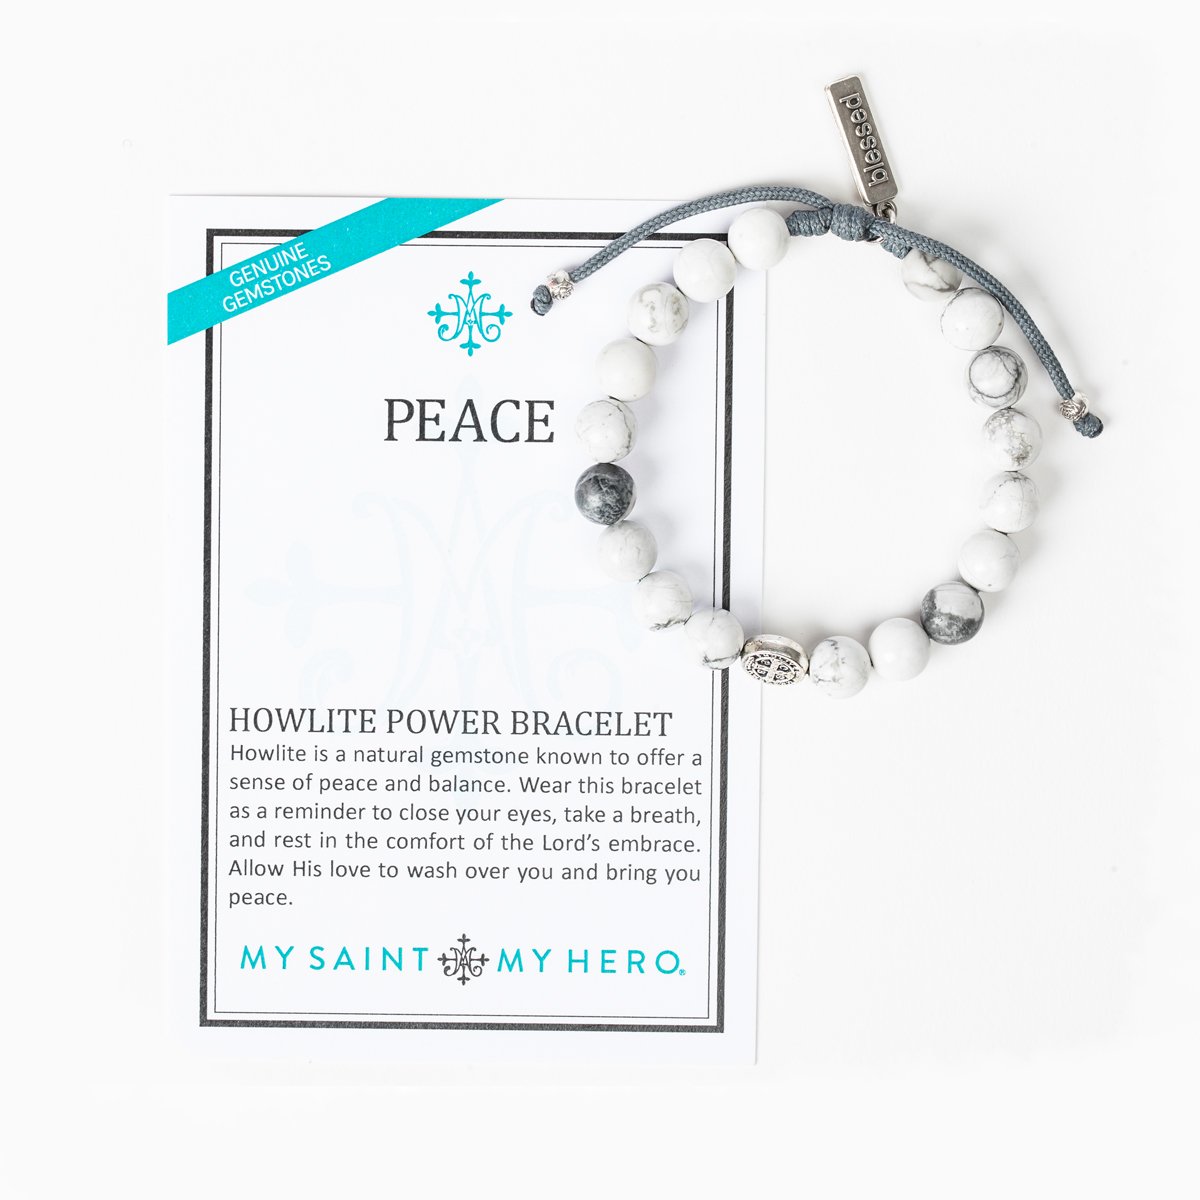 Peace Howlite Power Bracelet